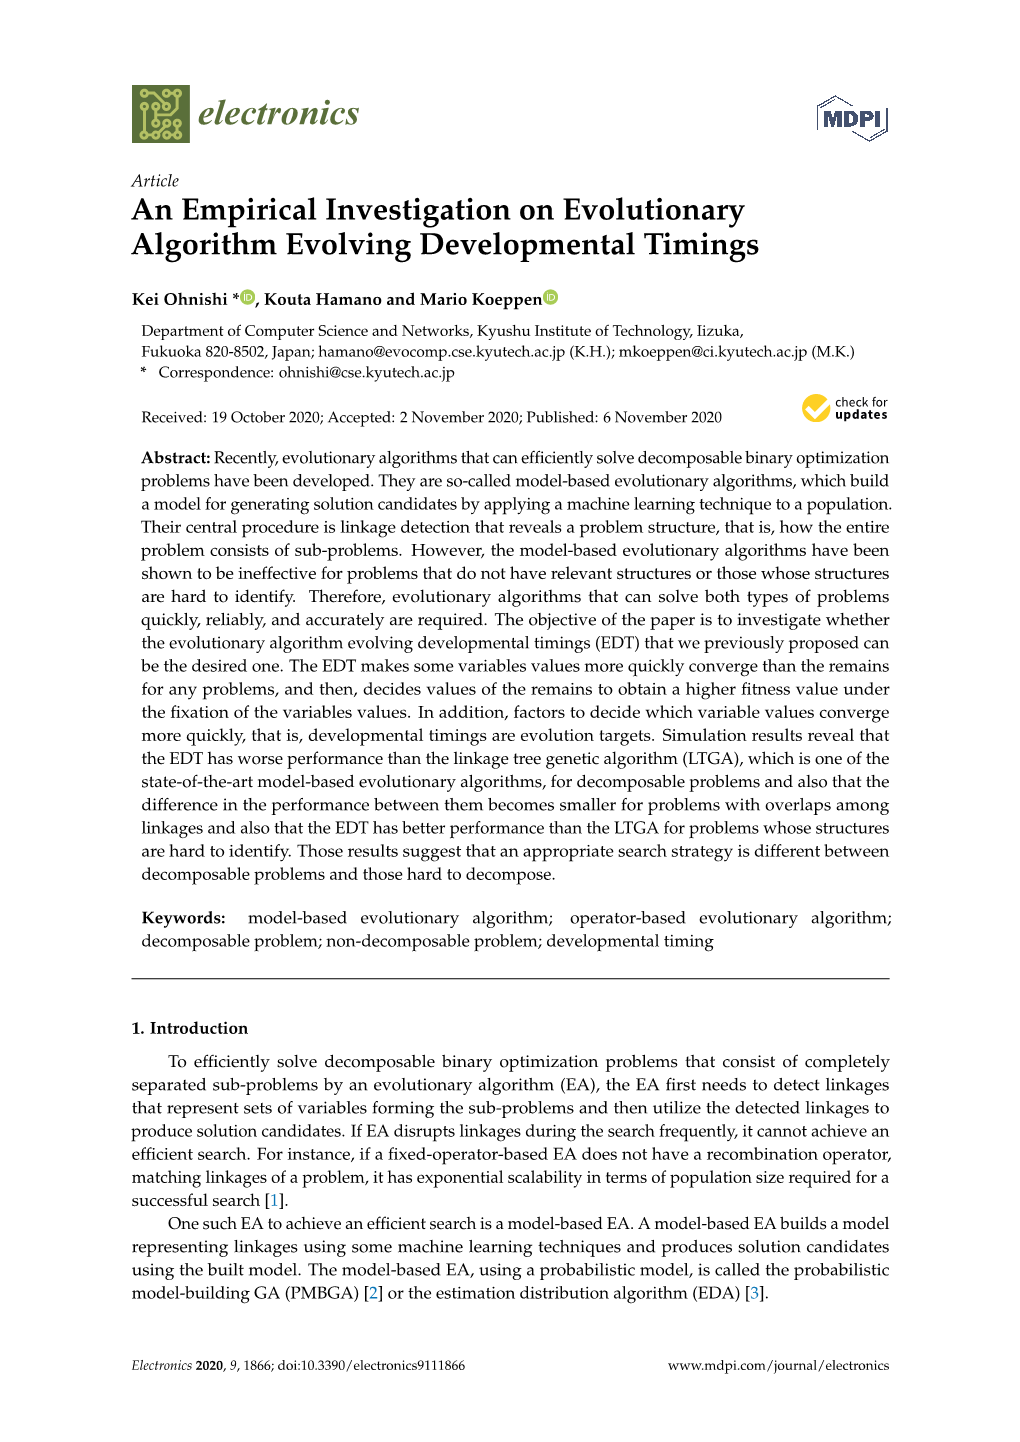 An Empirical Investigation on Evolutionary Algorithm Evolving Developmental Timings